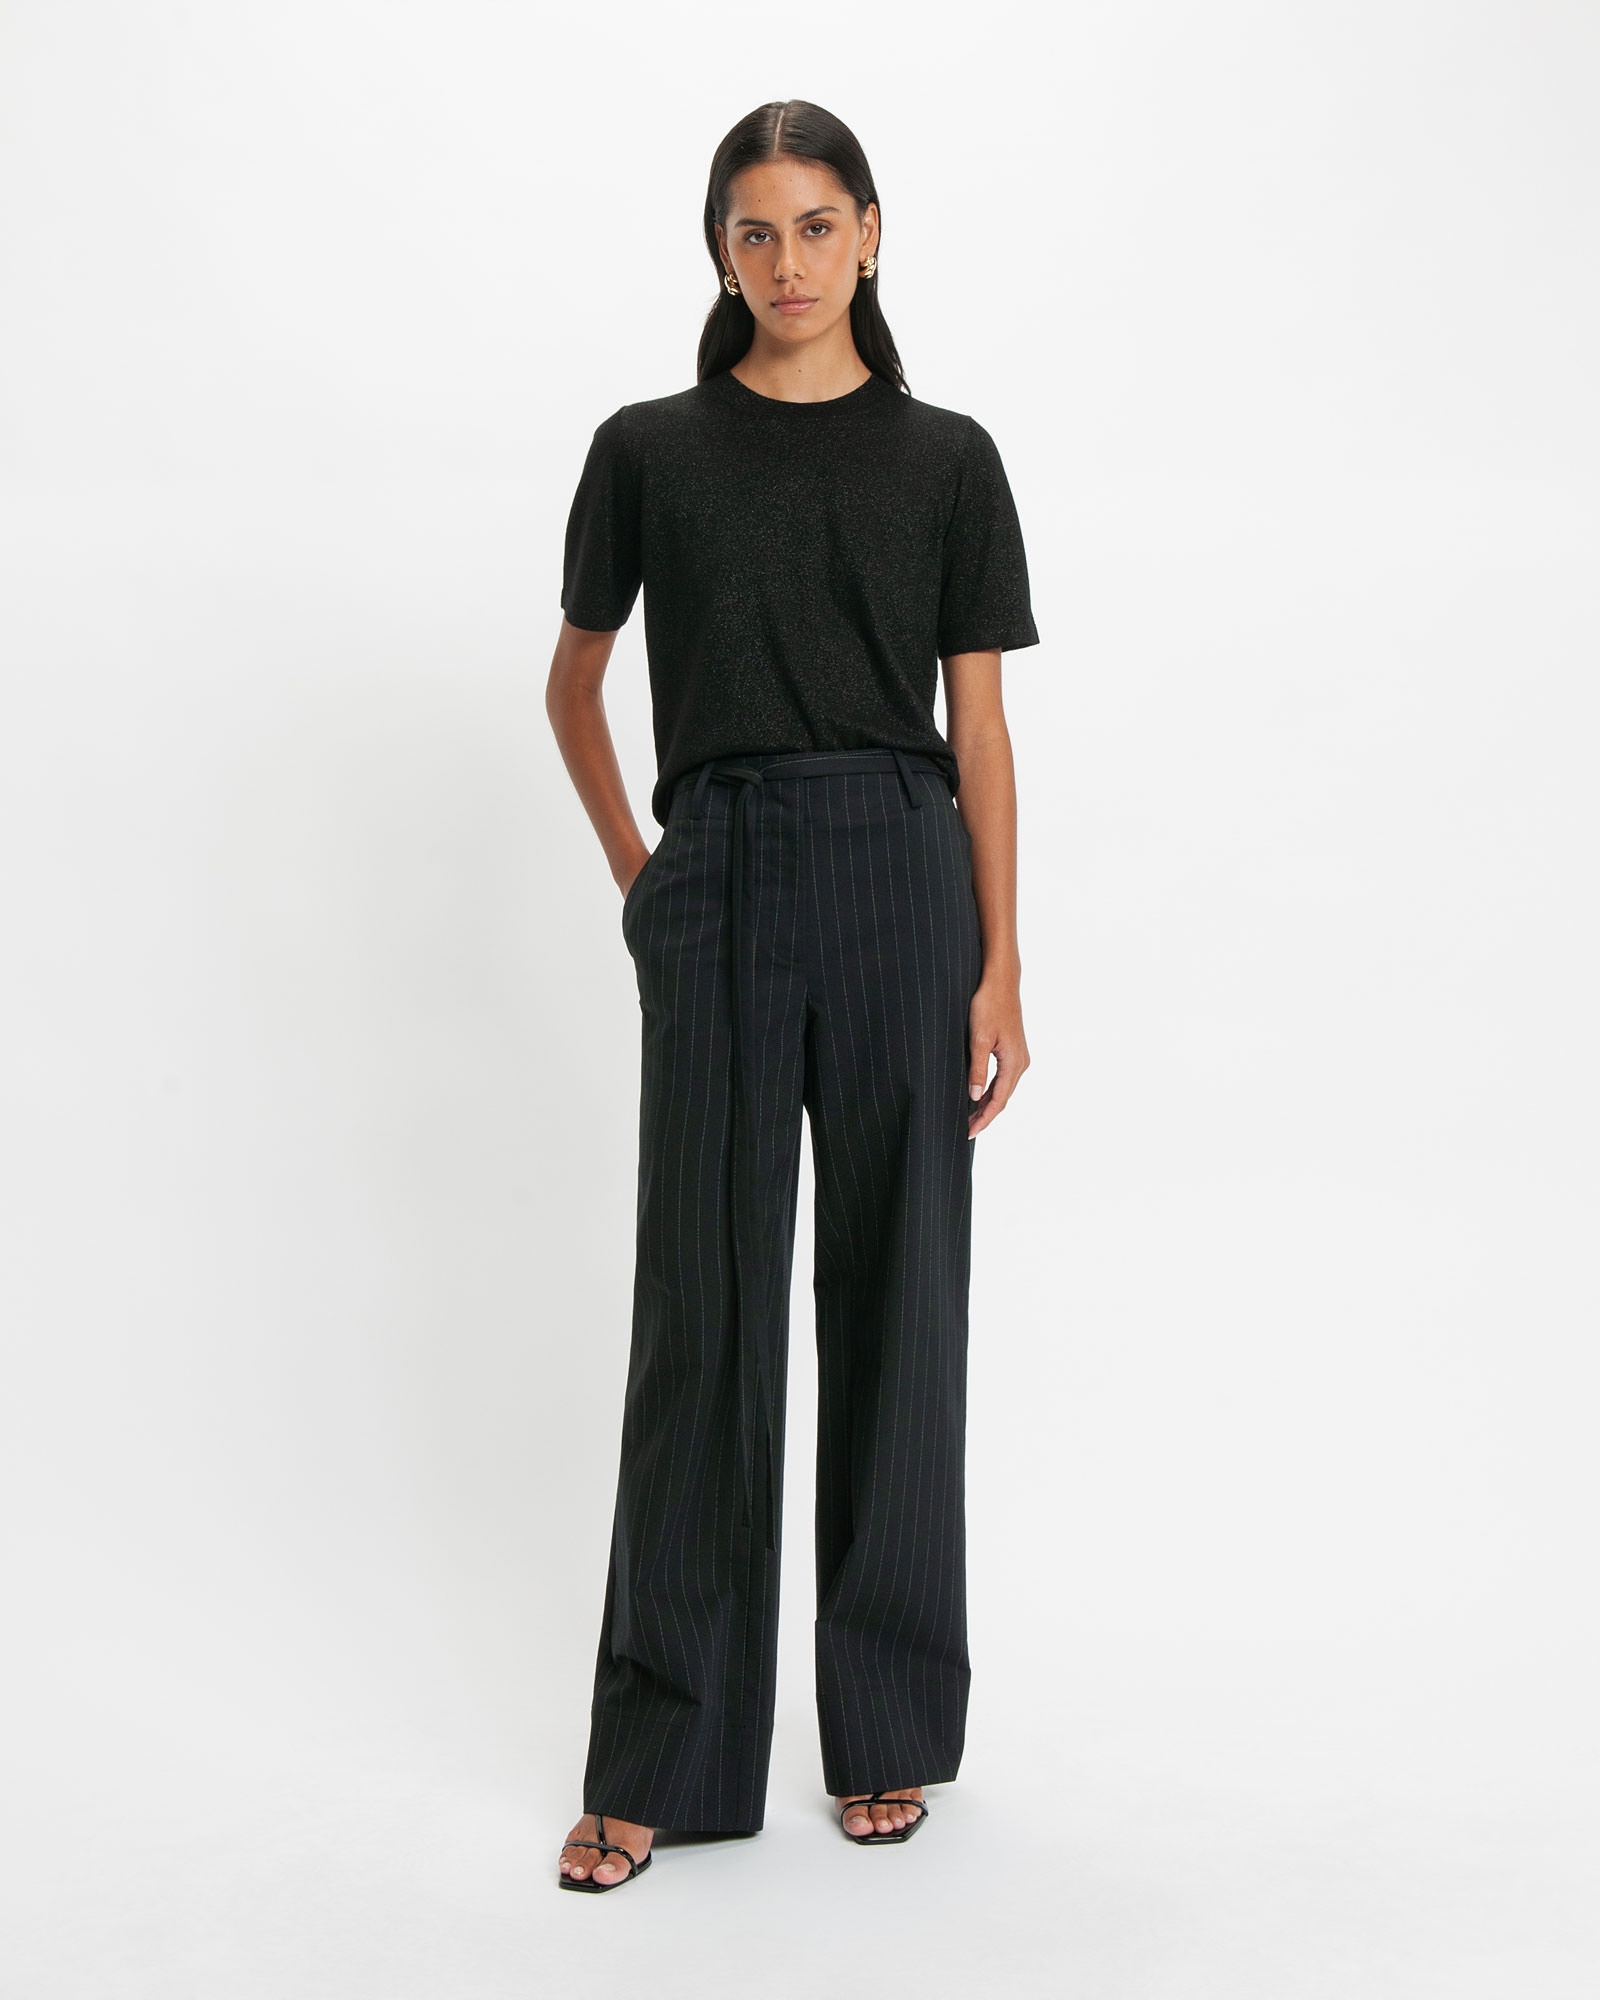 Knitwear | Lurex Knitted Tee | 990 Black